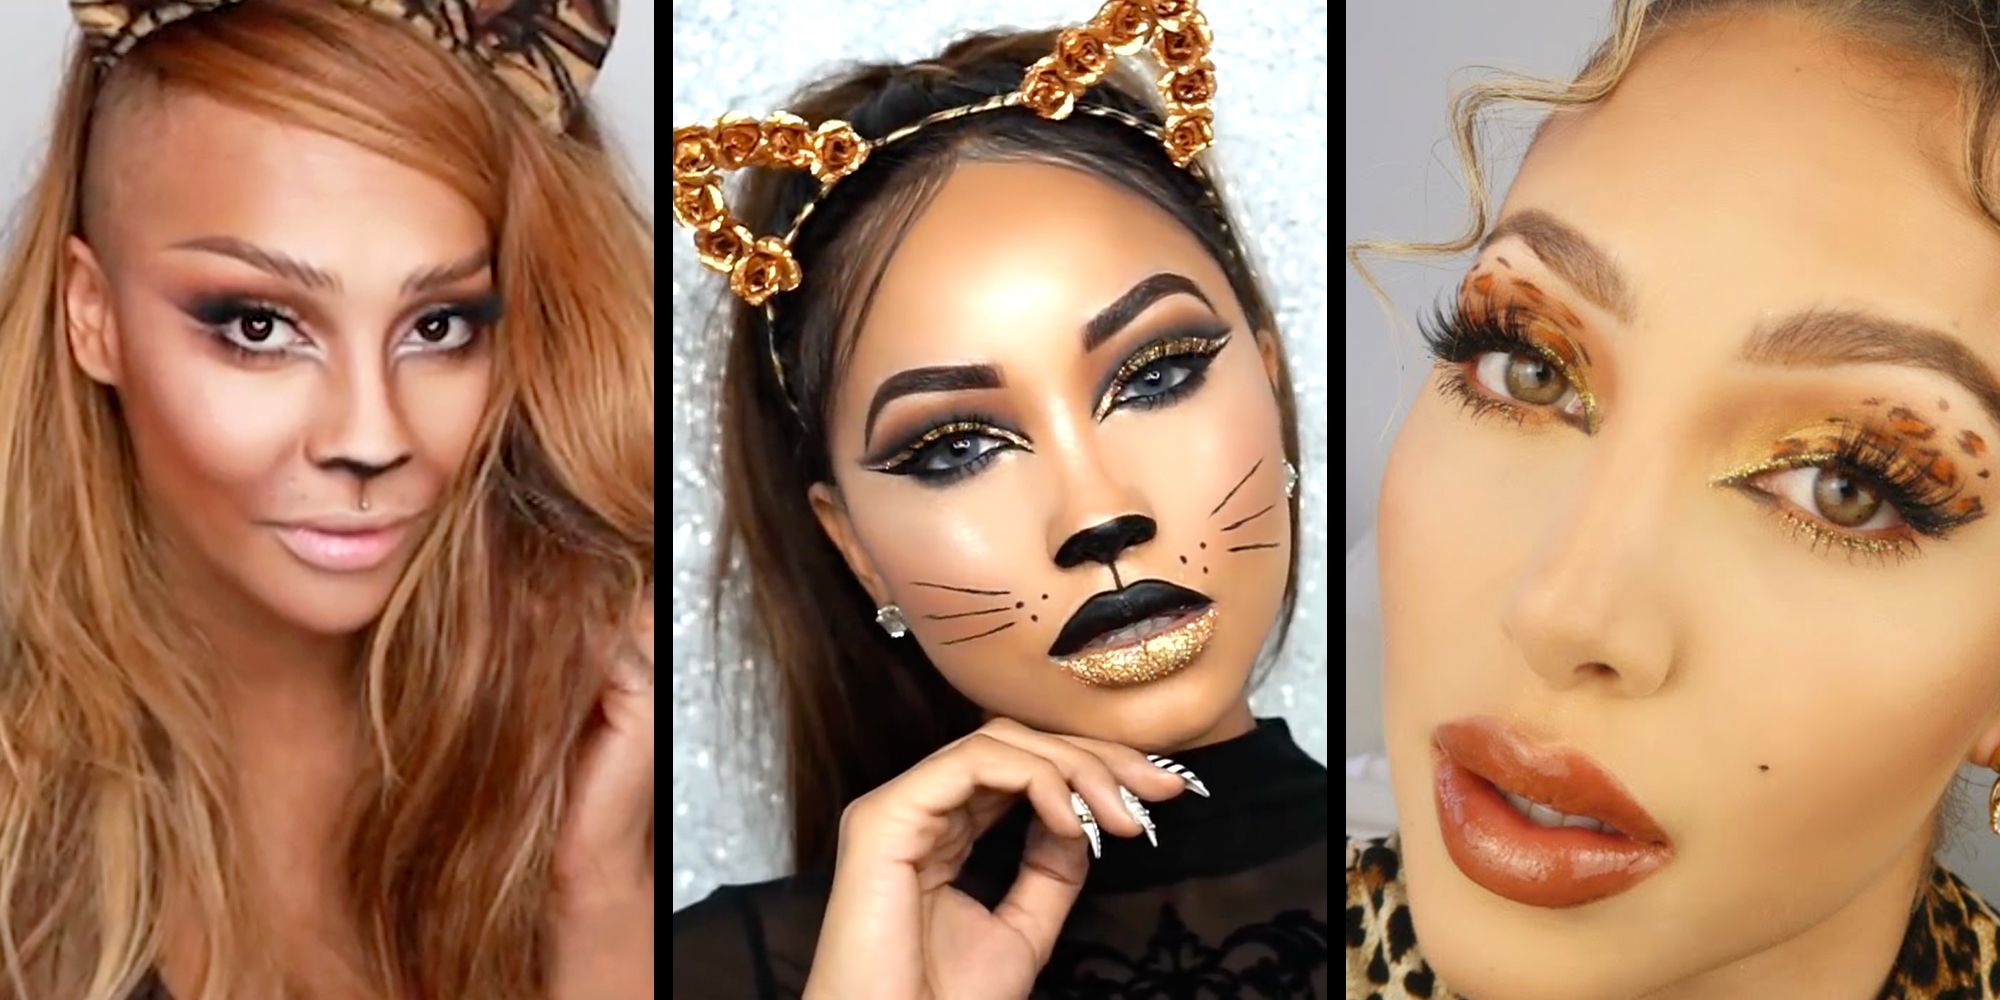 Easy Cat Makeup Look for Halloween Using Eyeliner - Lancôme